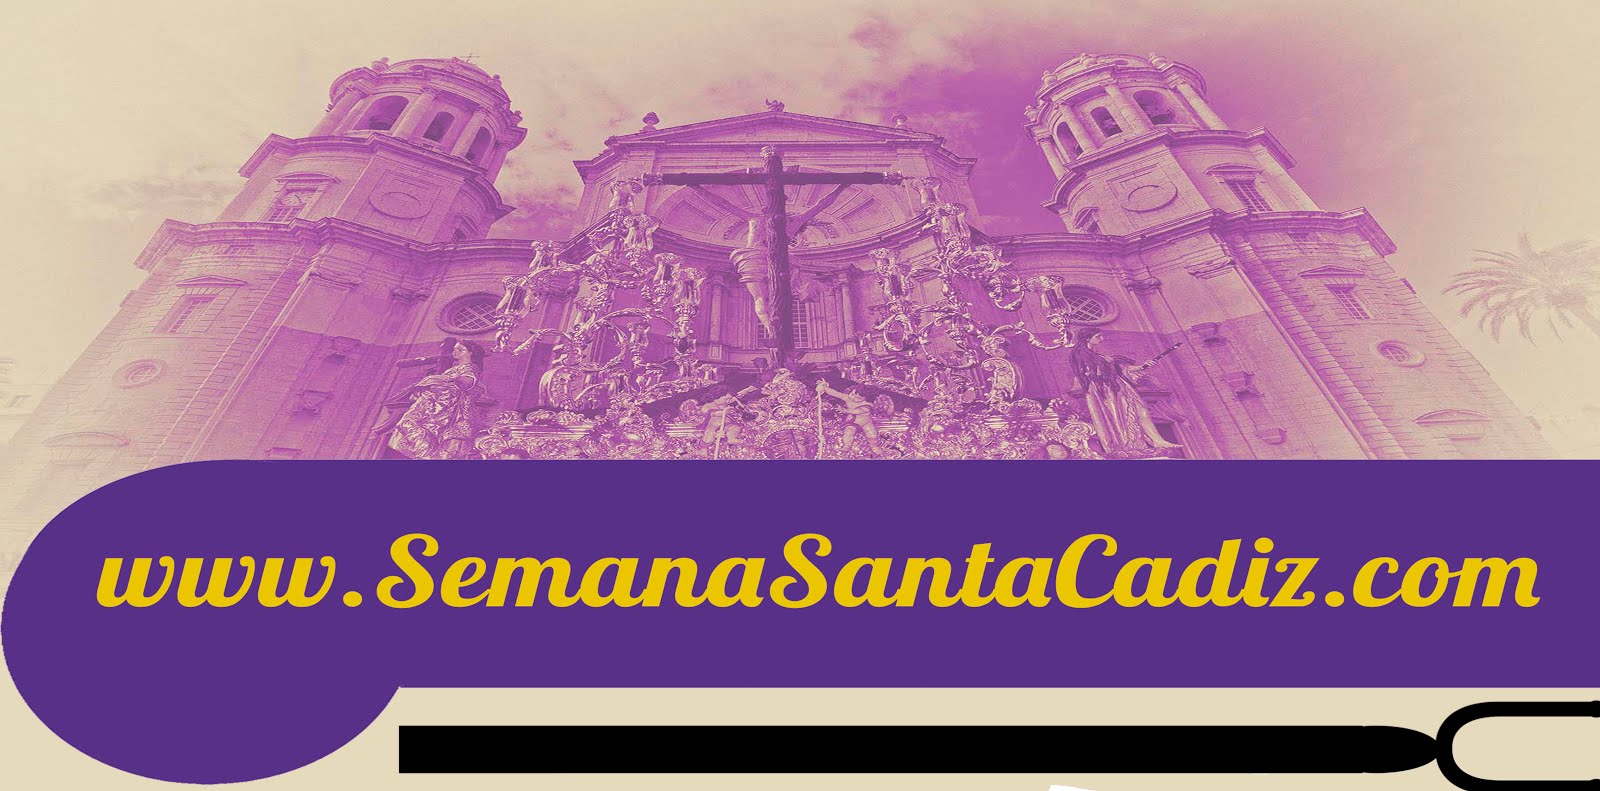 www.SemanaSantaCadiz.com